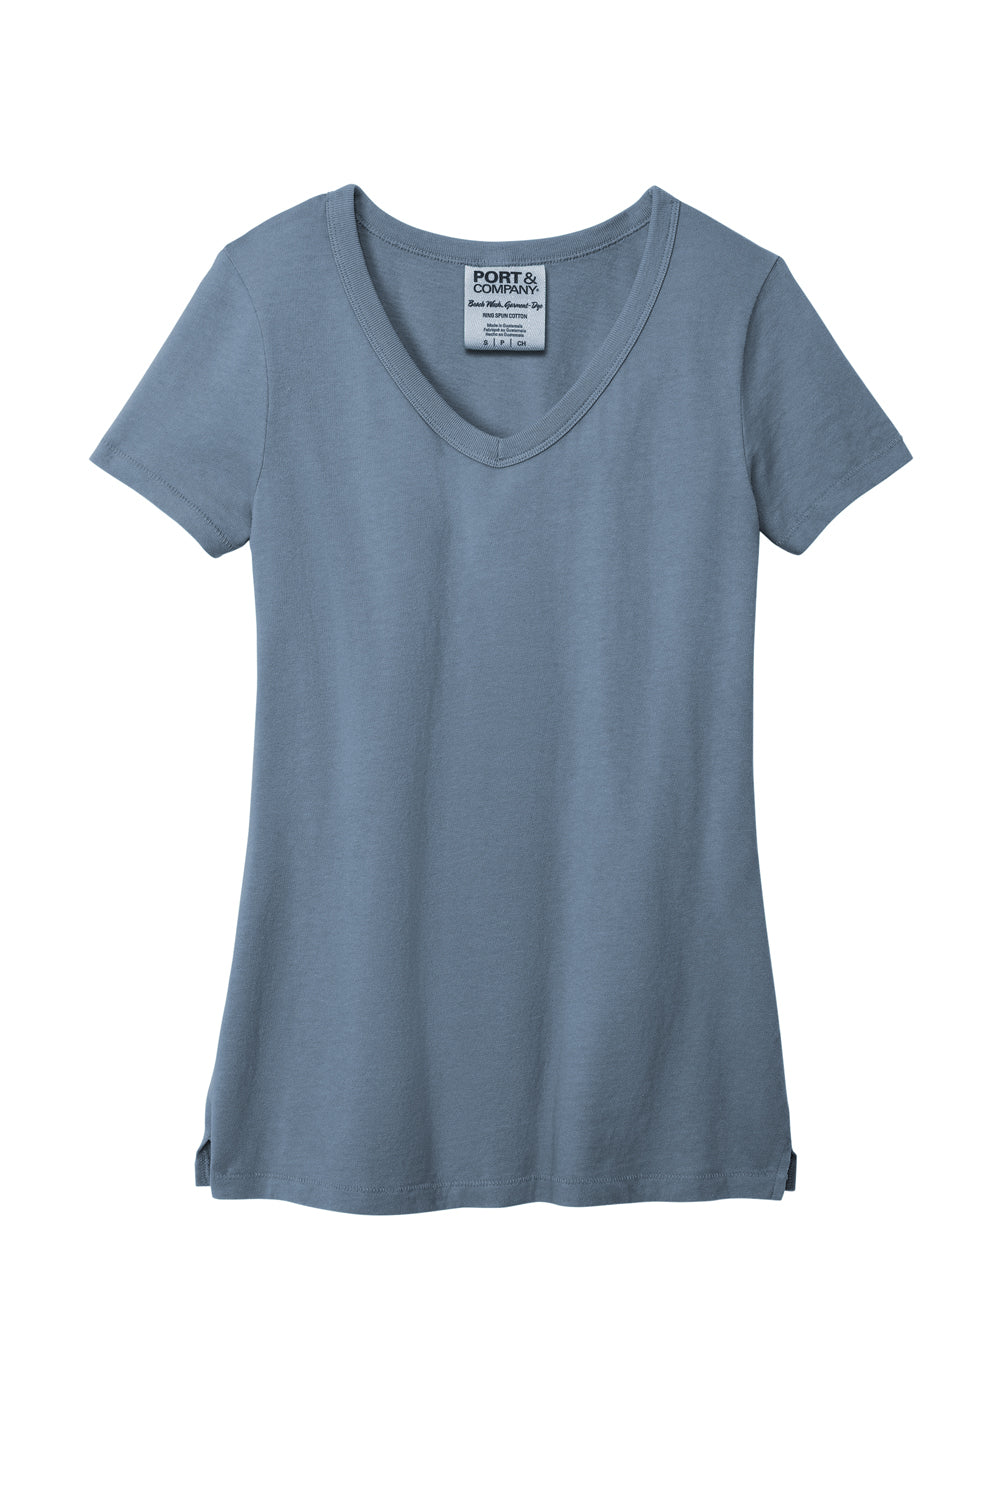 Port & Company LPC099V Womens Beach Wash Garment Dyed Short Sleeve V-Neck T-Shirt Faded Denim Blue Flat Front